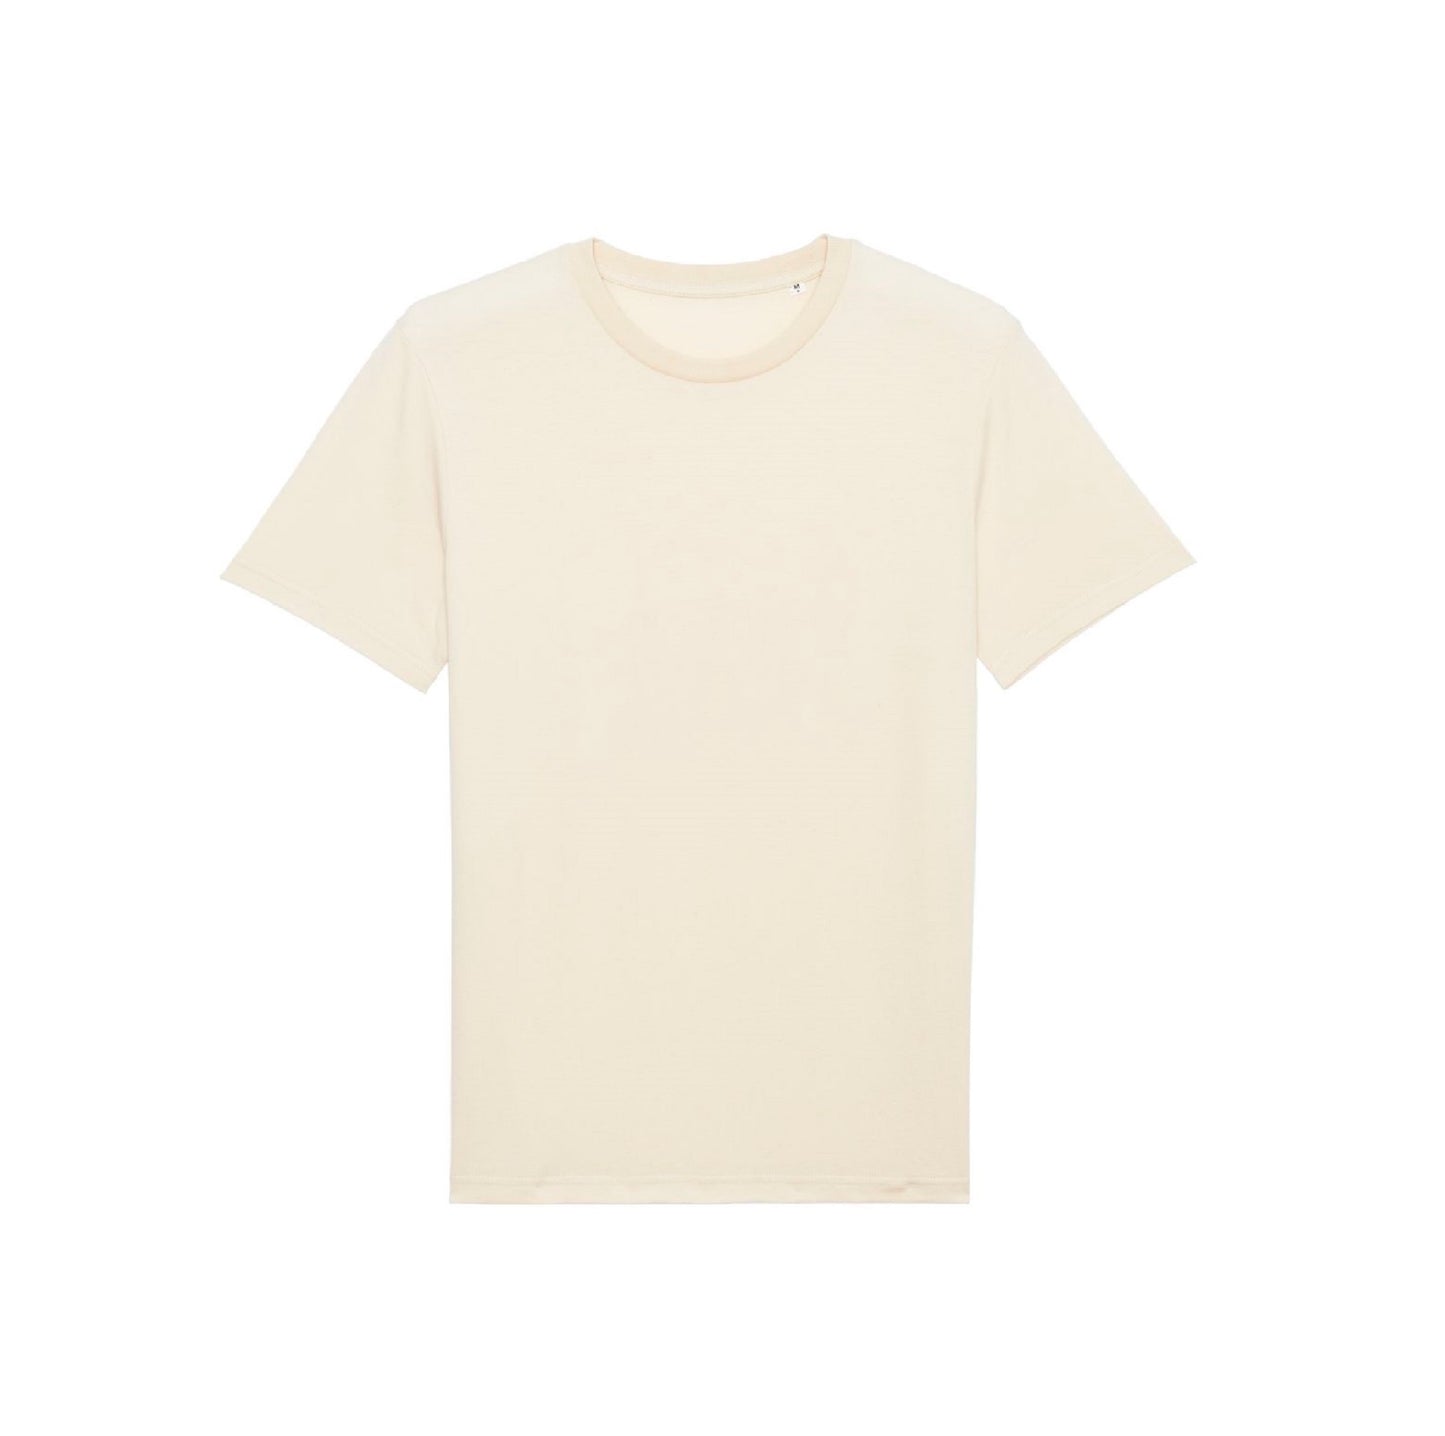 The Organic Cotton T-Shirt